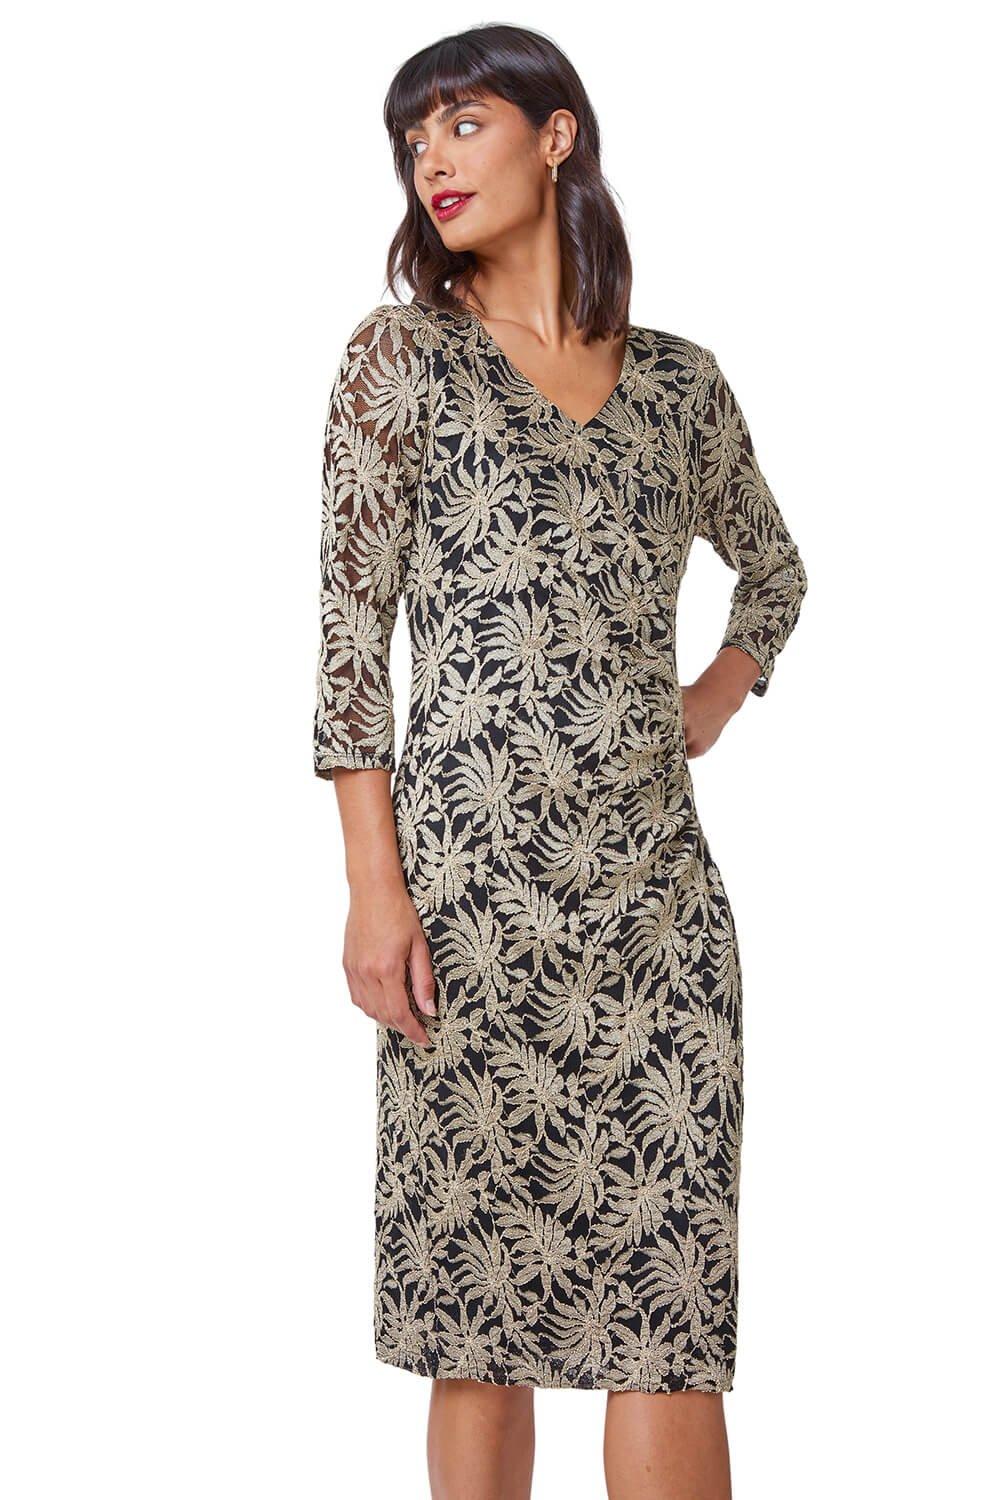 Palm Print Lace Ruched Dress